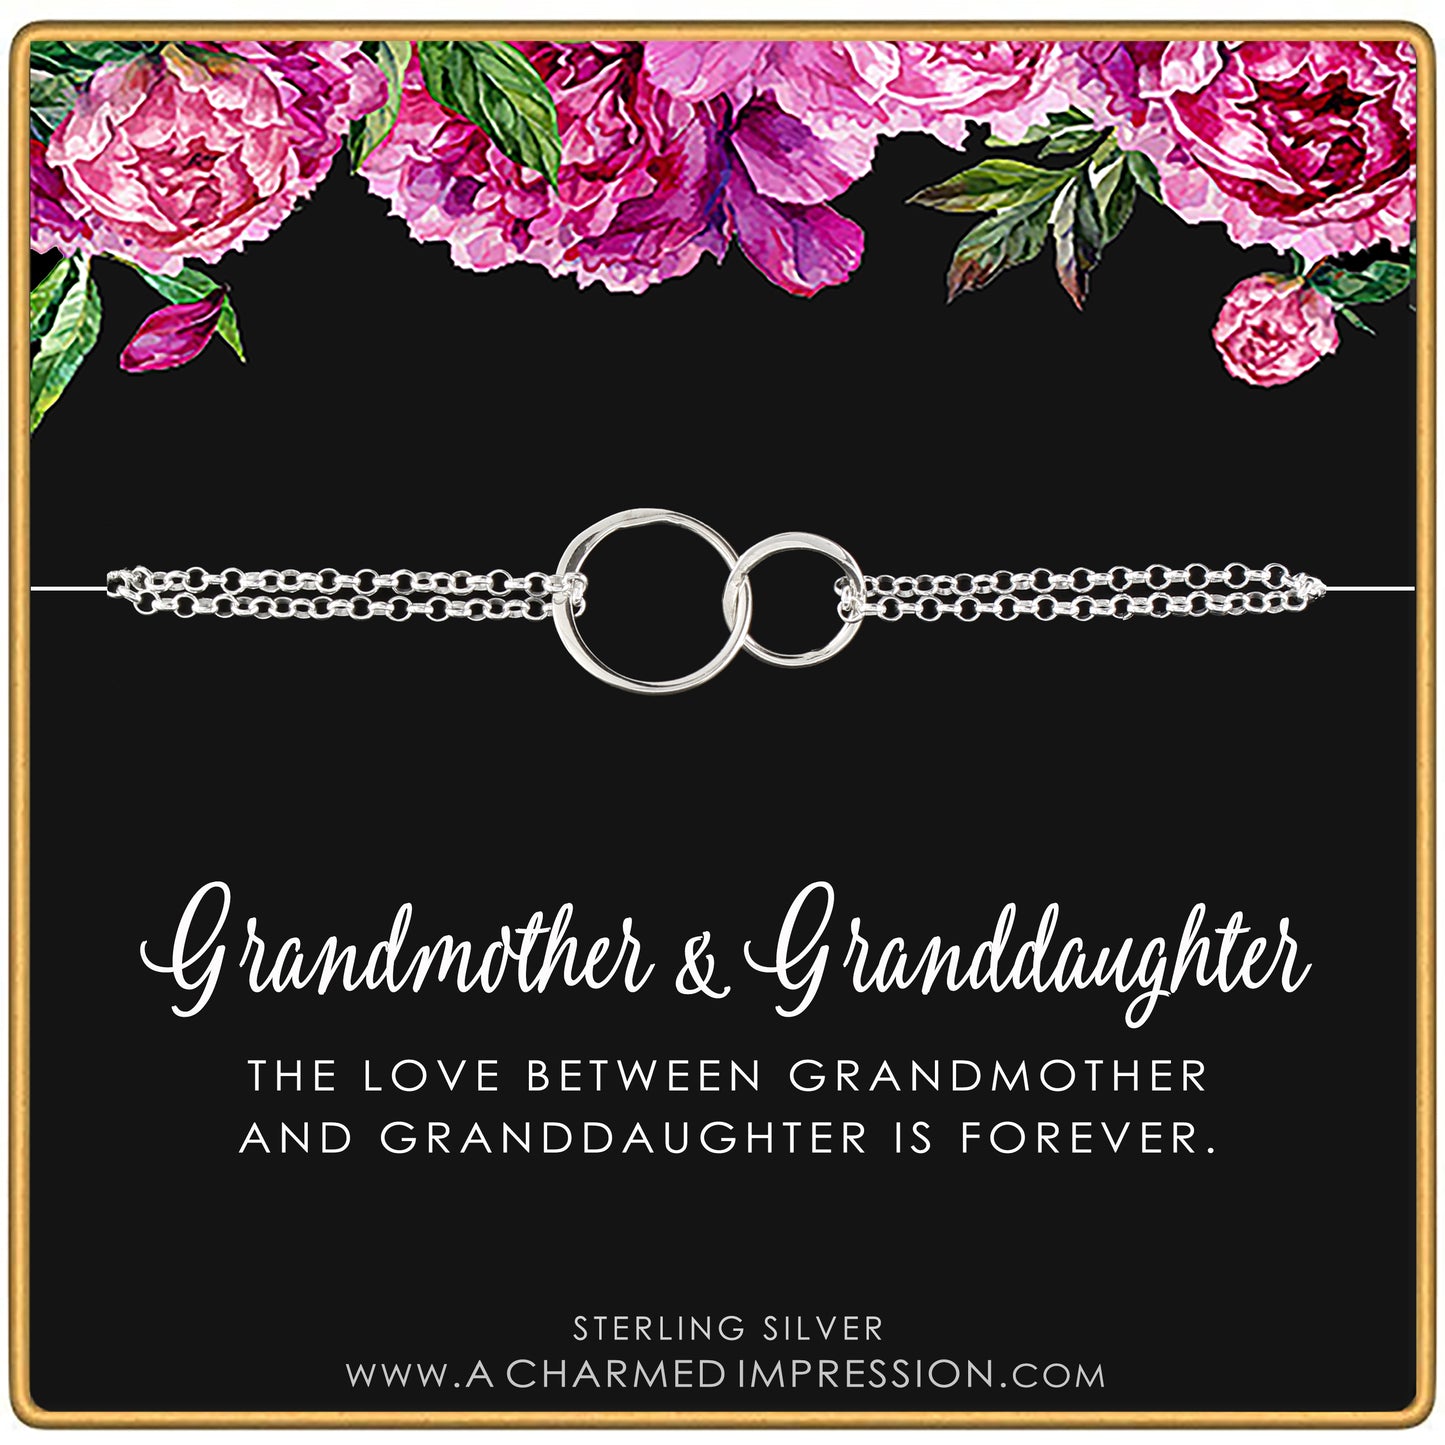 Granddaughter Gifts from Grandma • Jewelry for Grandmother Granddaughter Gifts • Sterling Silver Interlocking Connected Eternity Circles Bracelet • Handmade Bracelet for Women Girls